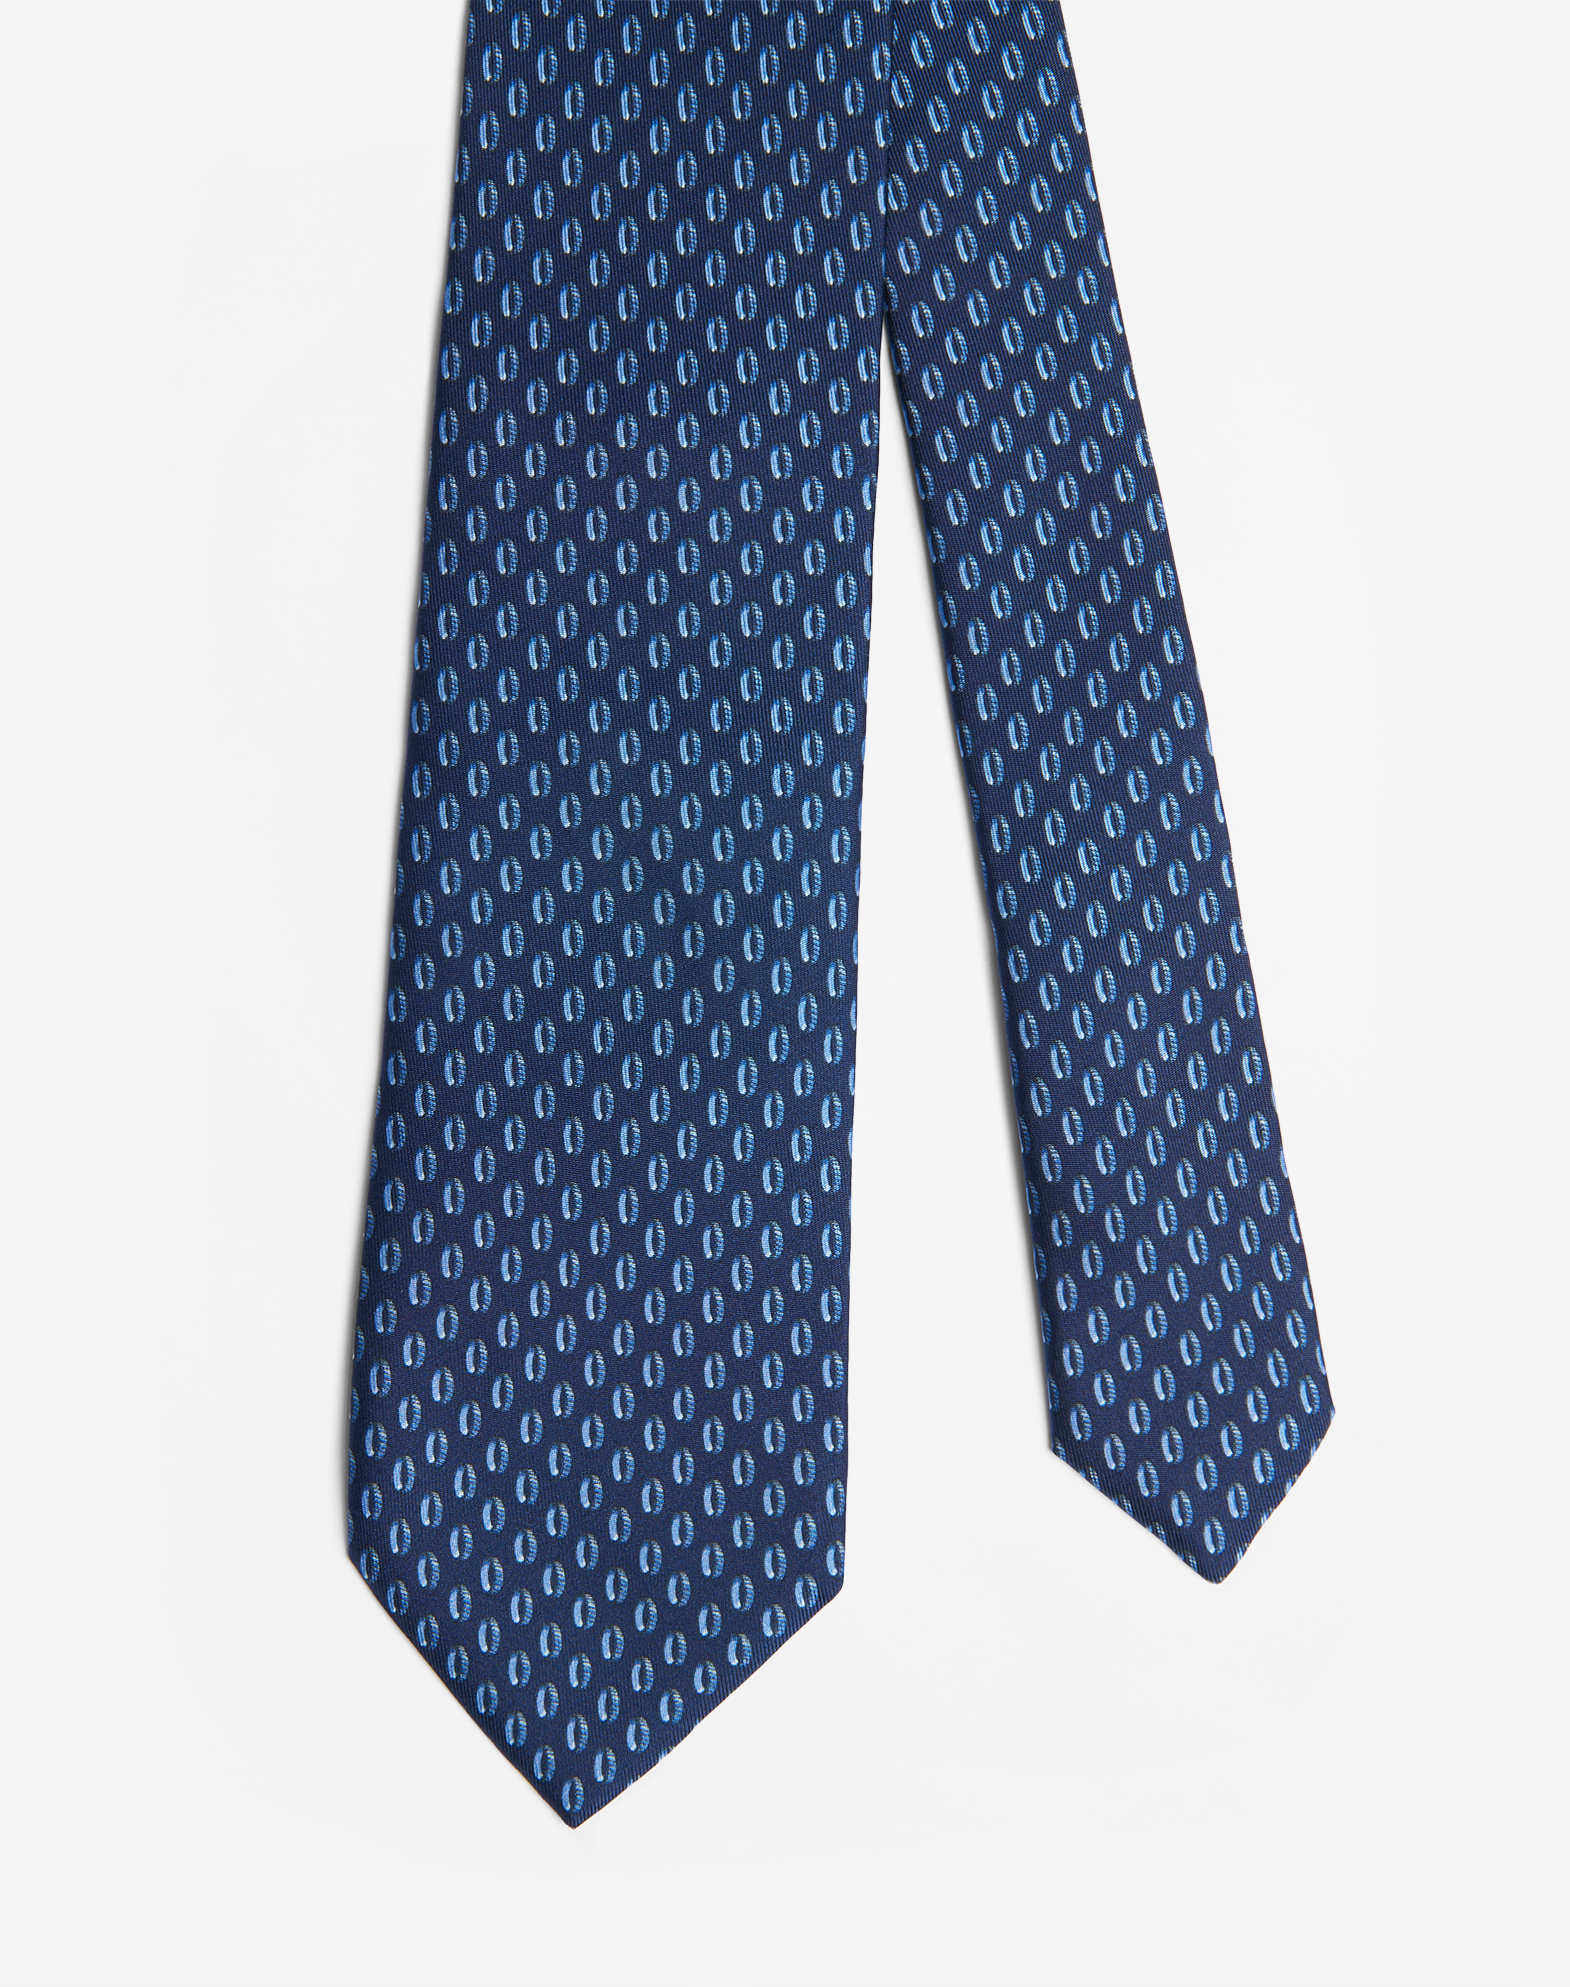 Dunhill Men's Printed Ties